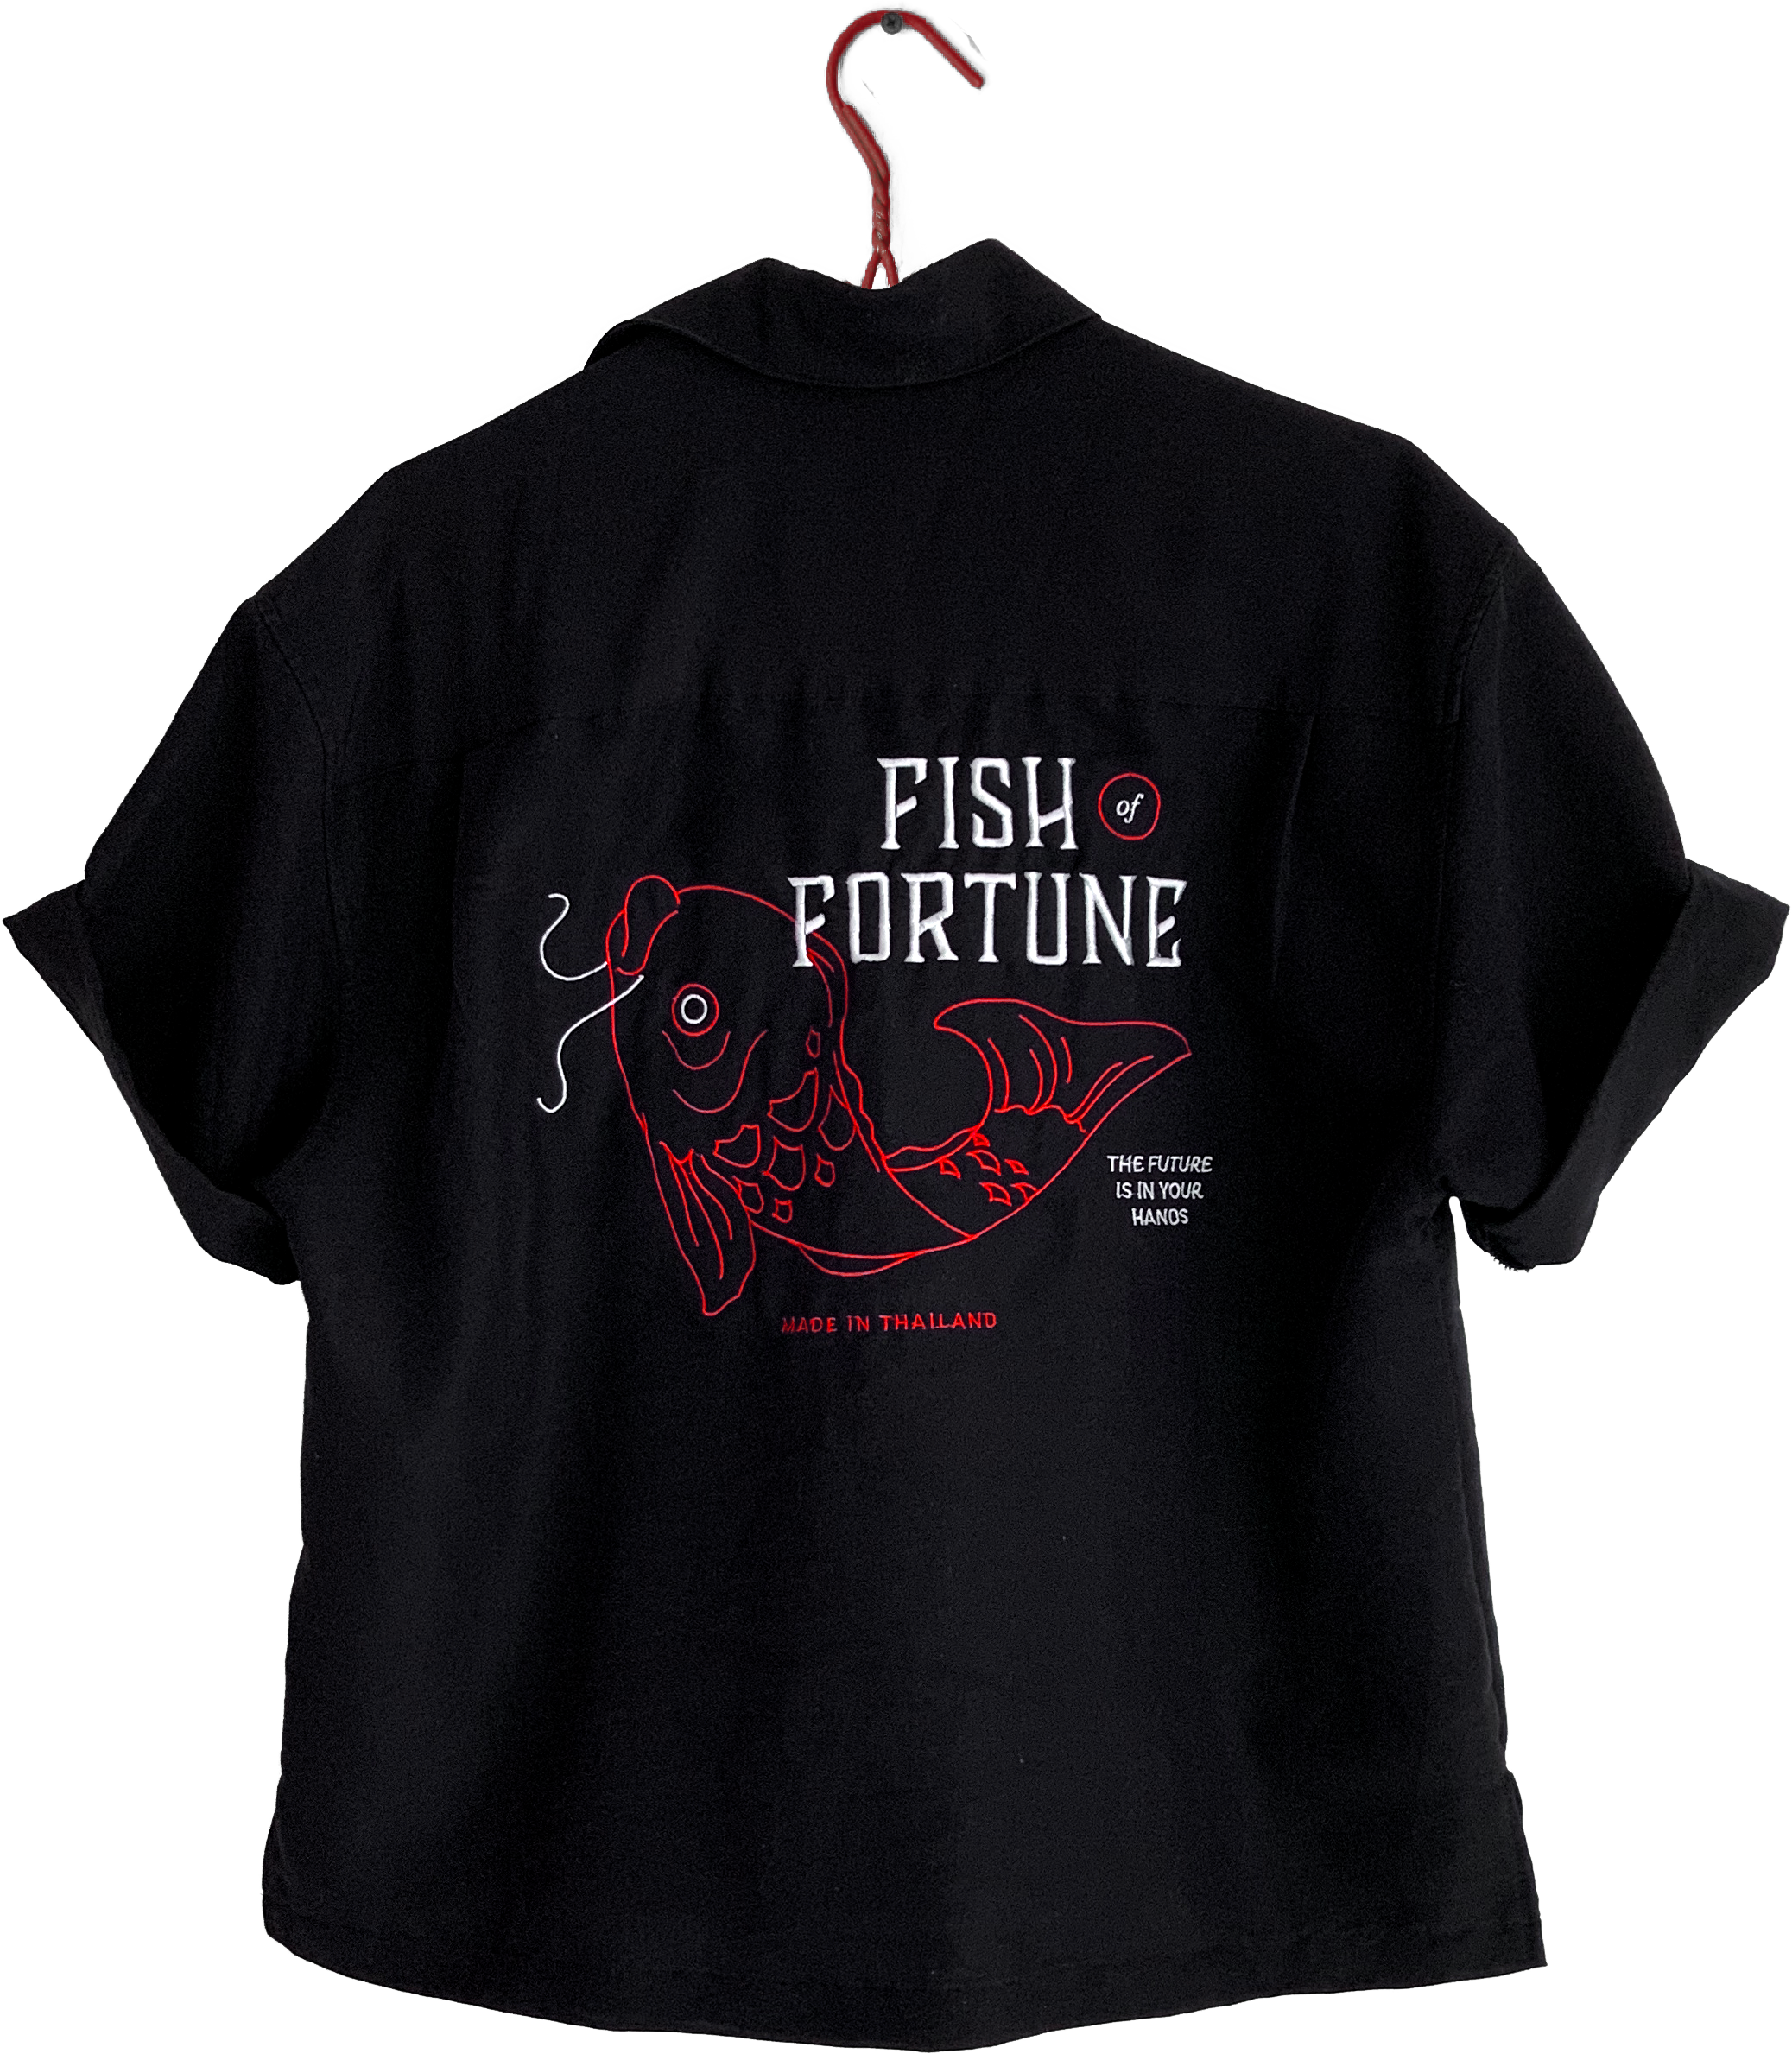 Grundens Eat Fish T-Shirt